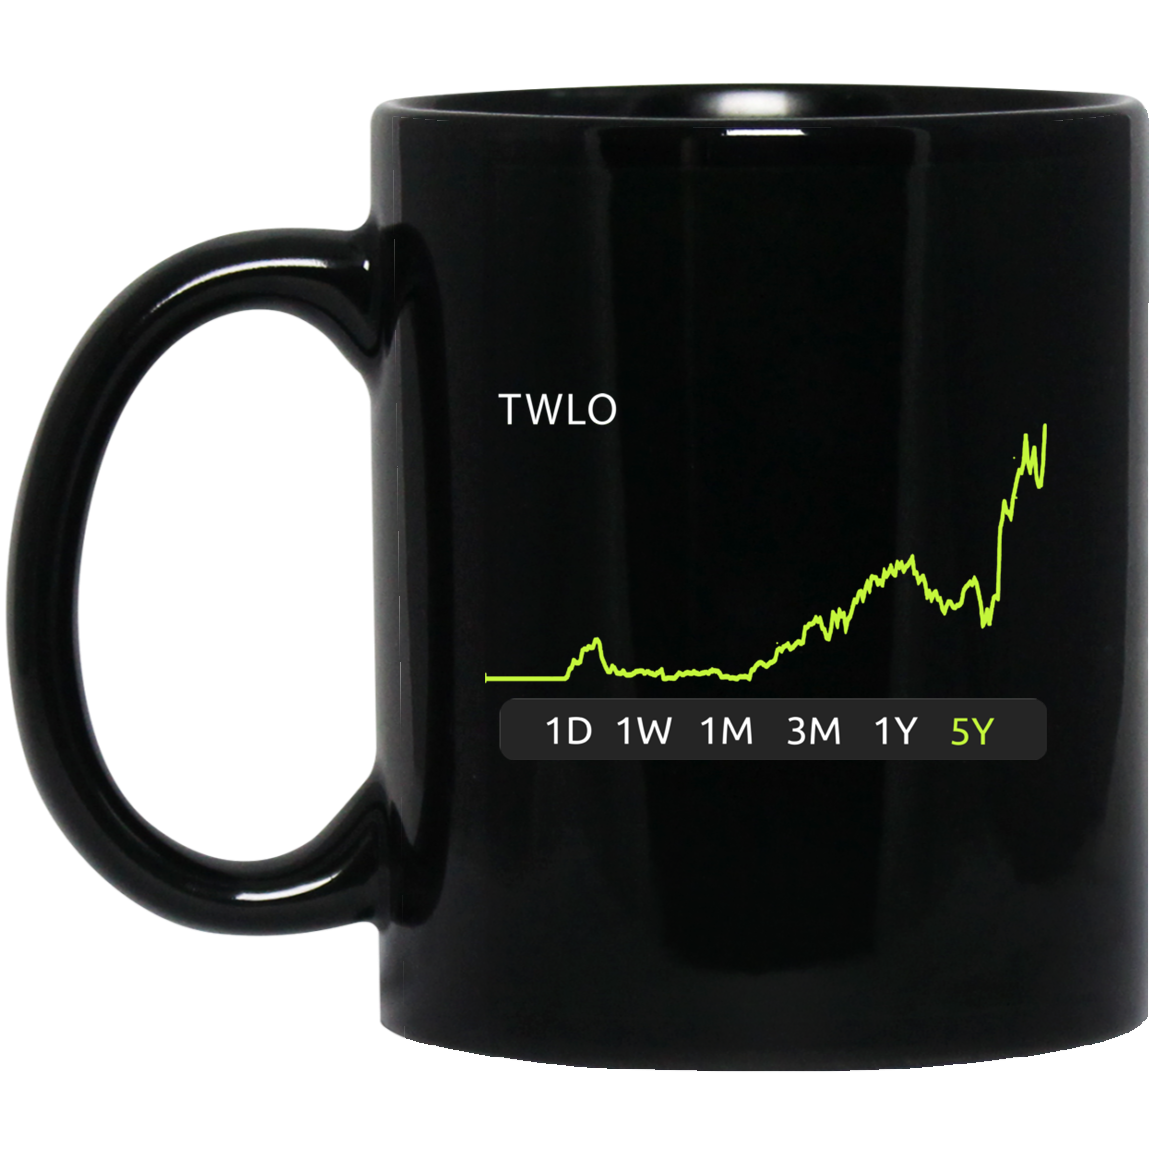 TWLO Stock 5y Mug